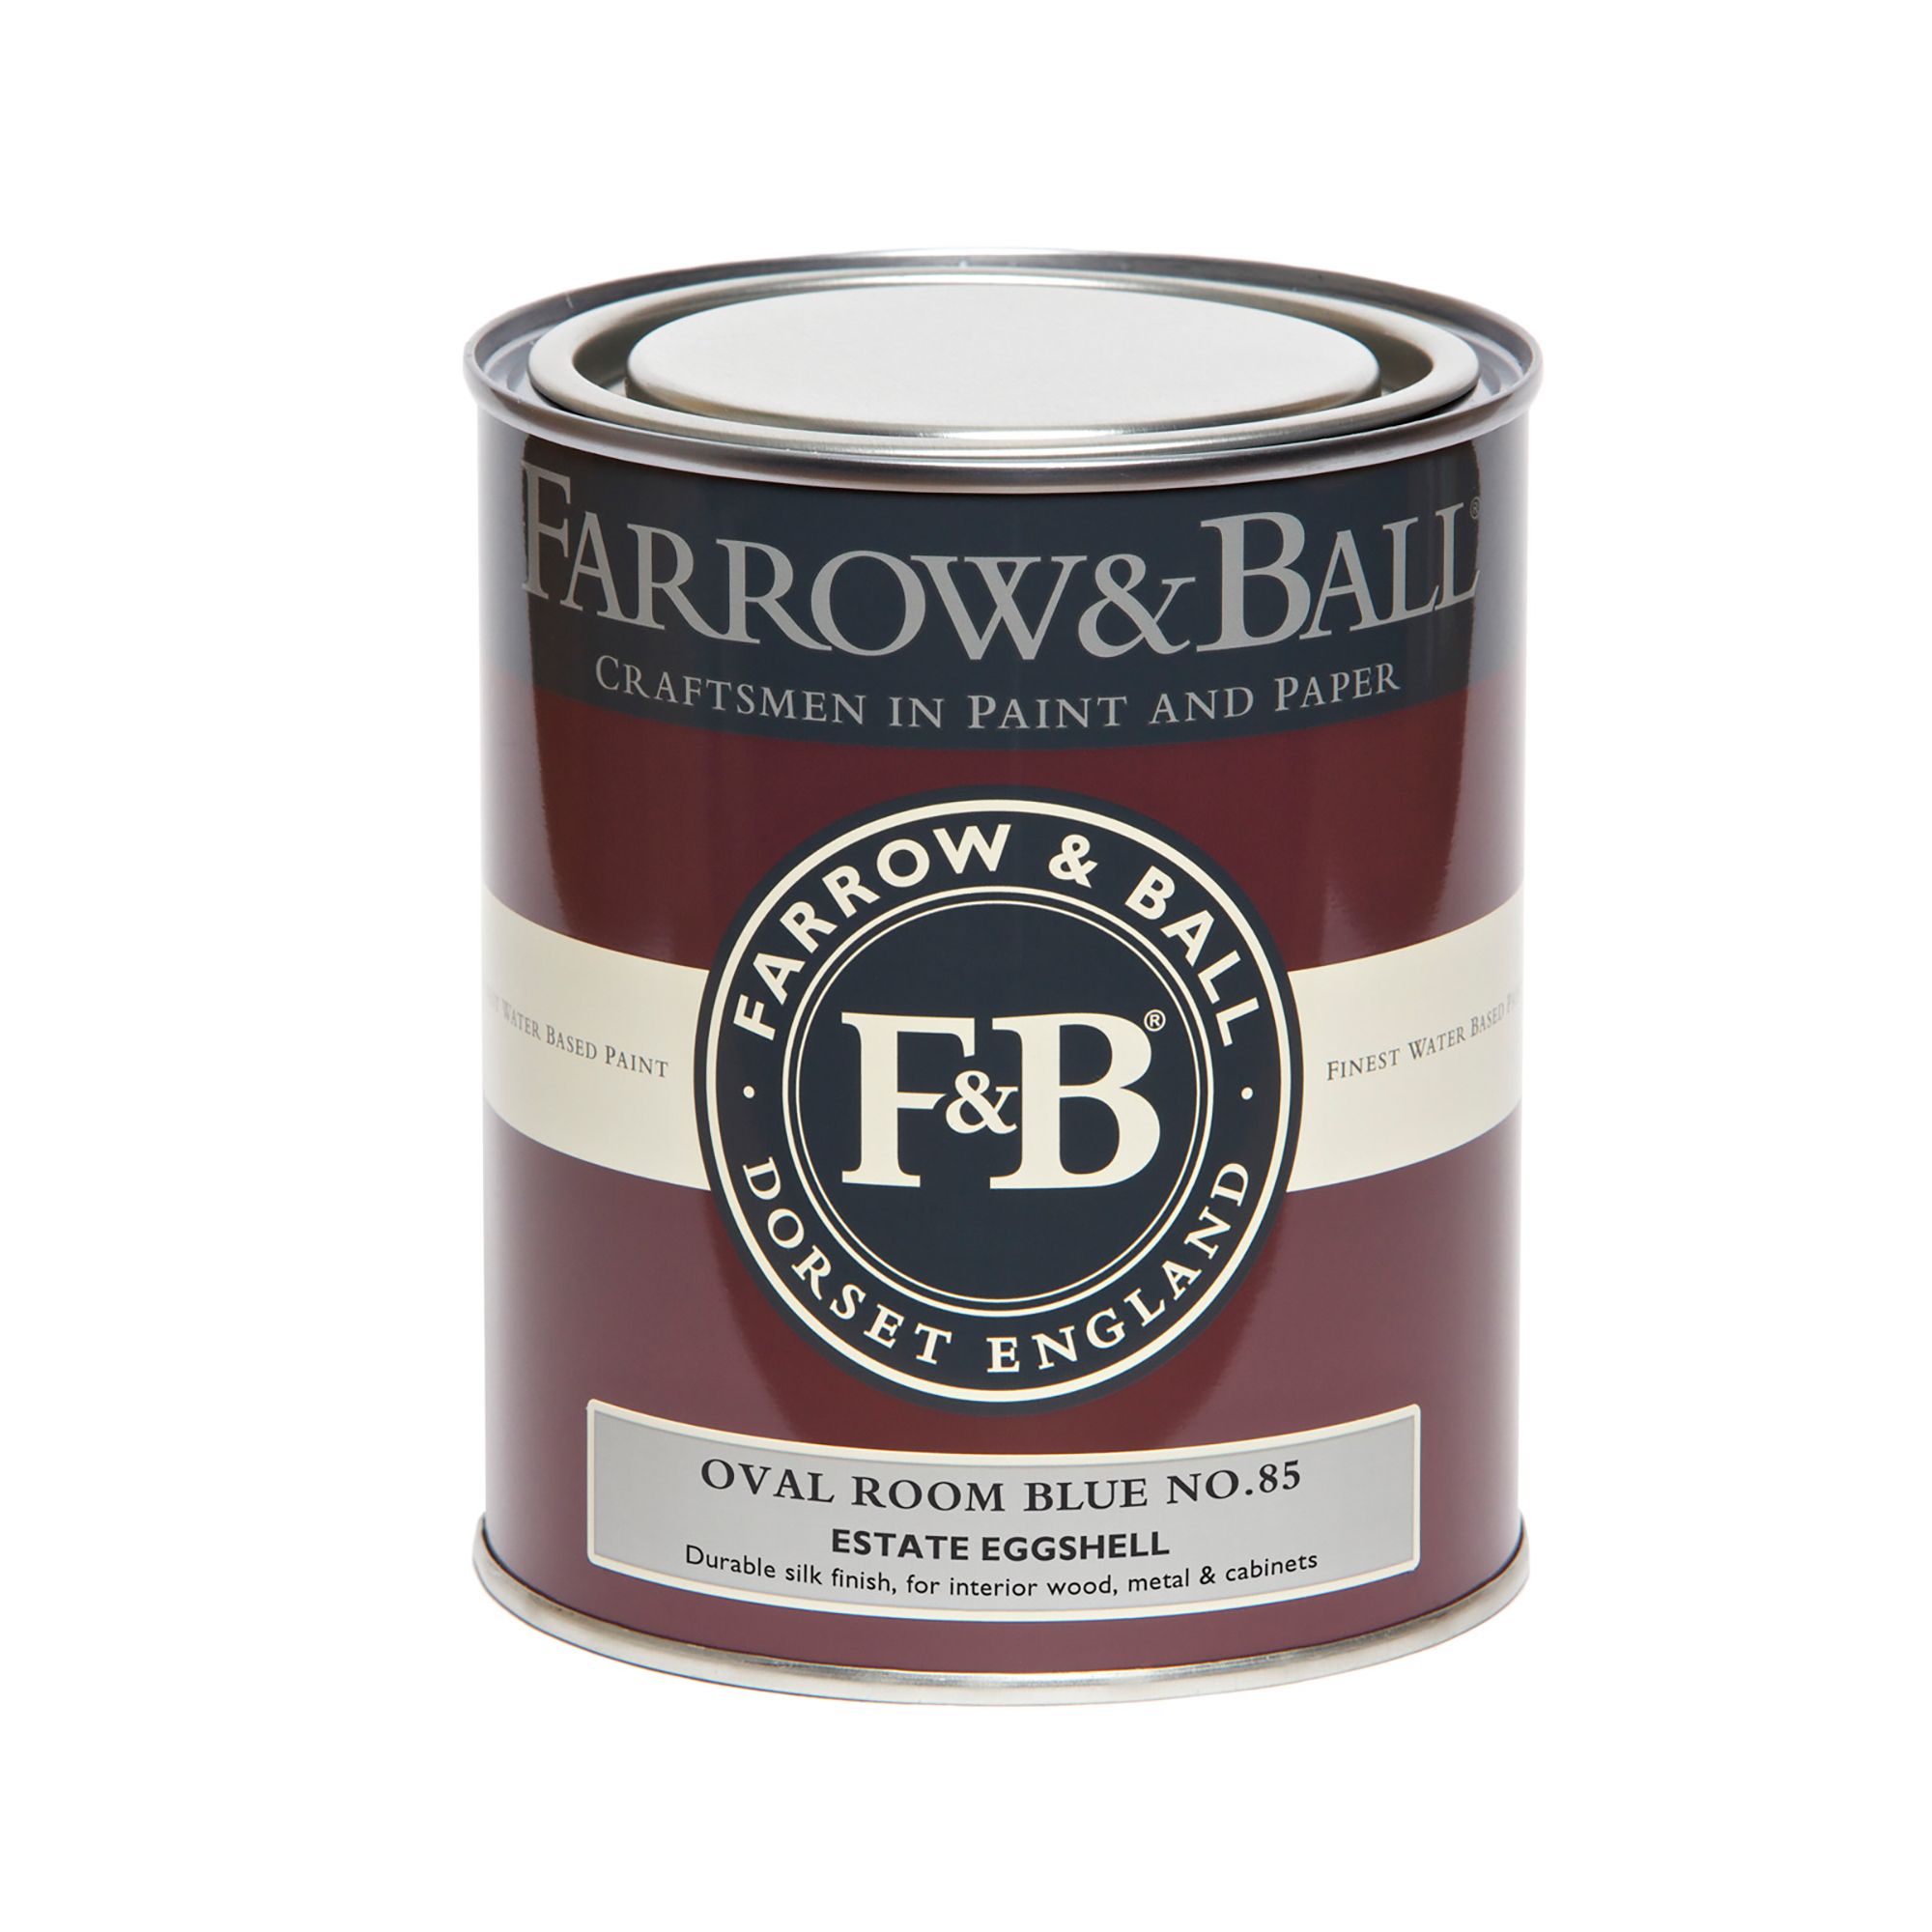 Farrow & Ball Estate Oval Room Blue No.85 Eggshell Paint, 750ml